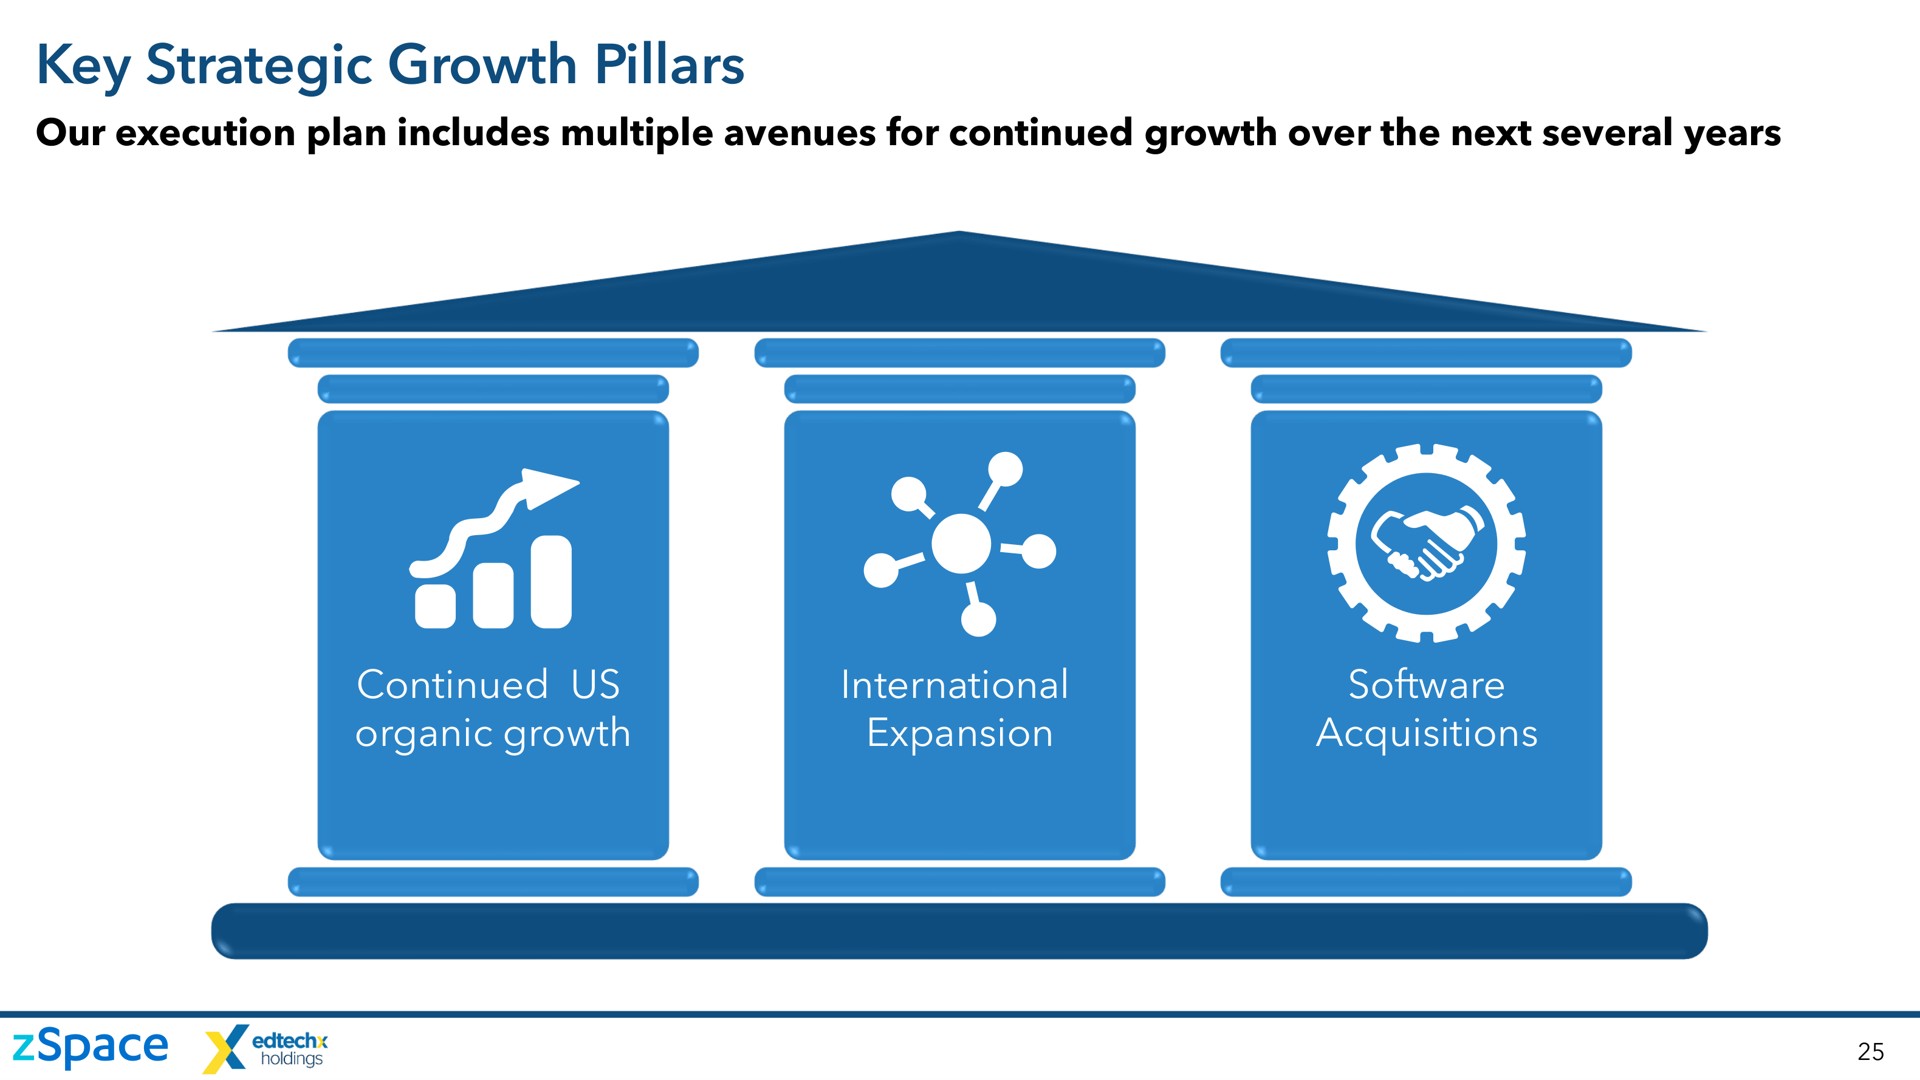 key strategic growth pillars | zSpace